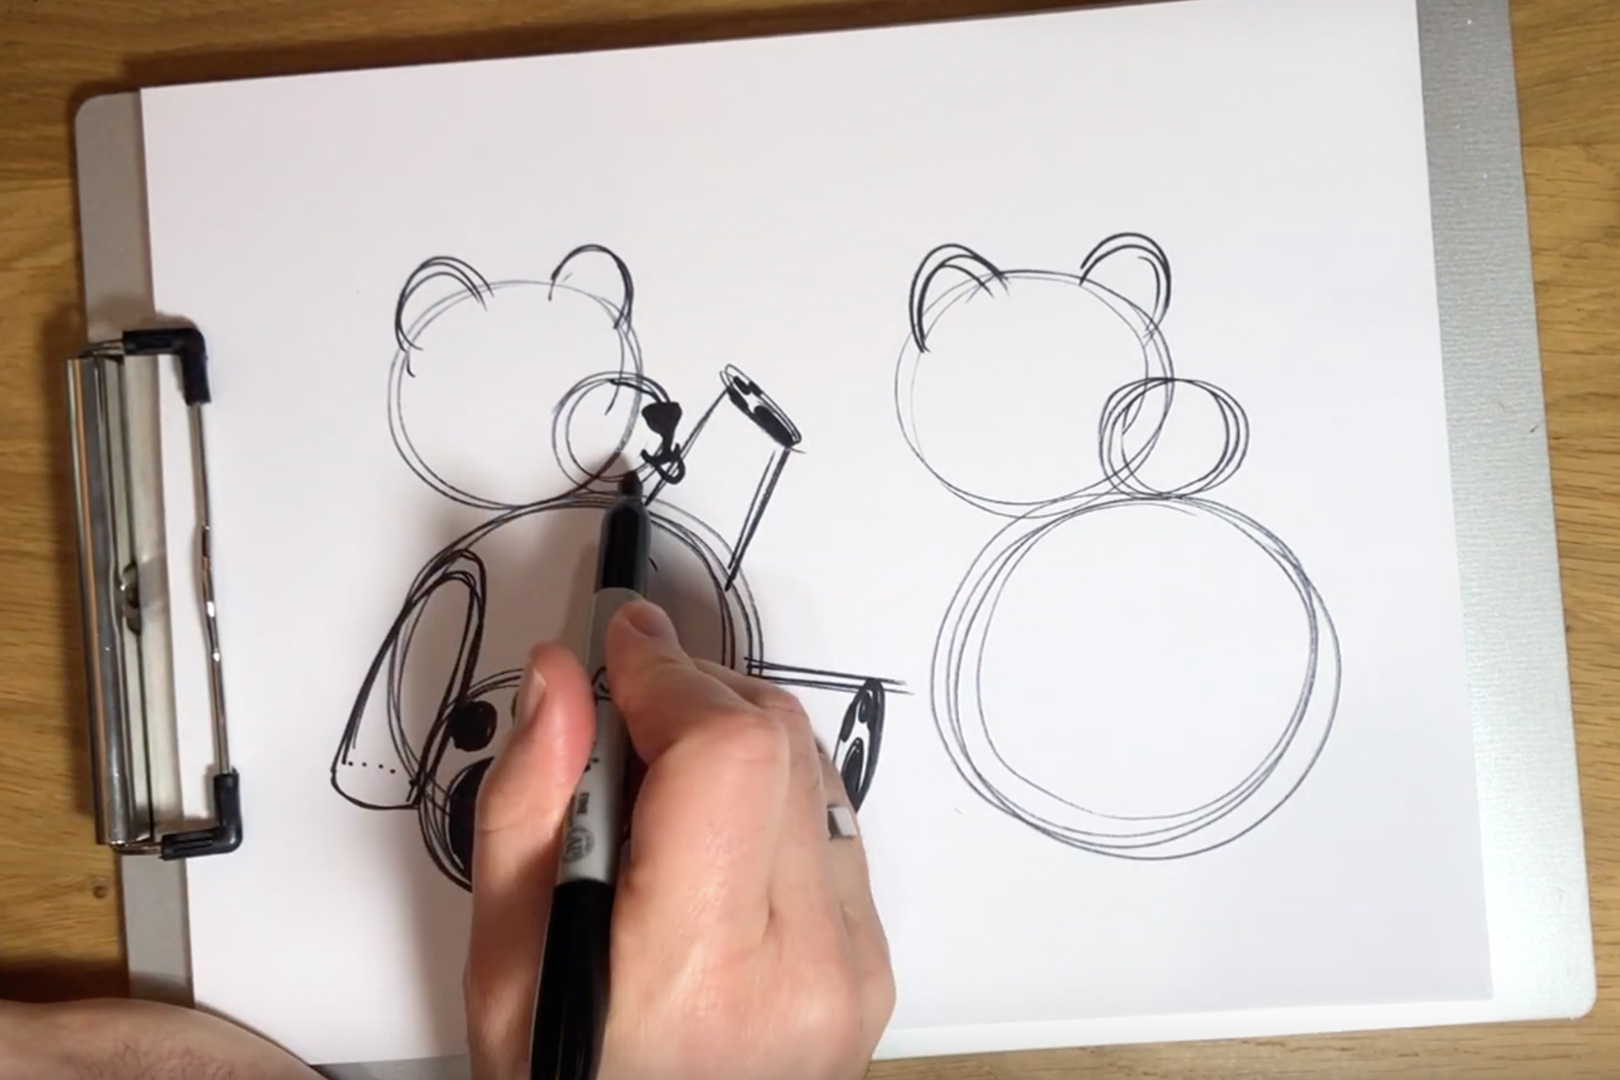 Michael DiTullo sketching a teddy bear.